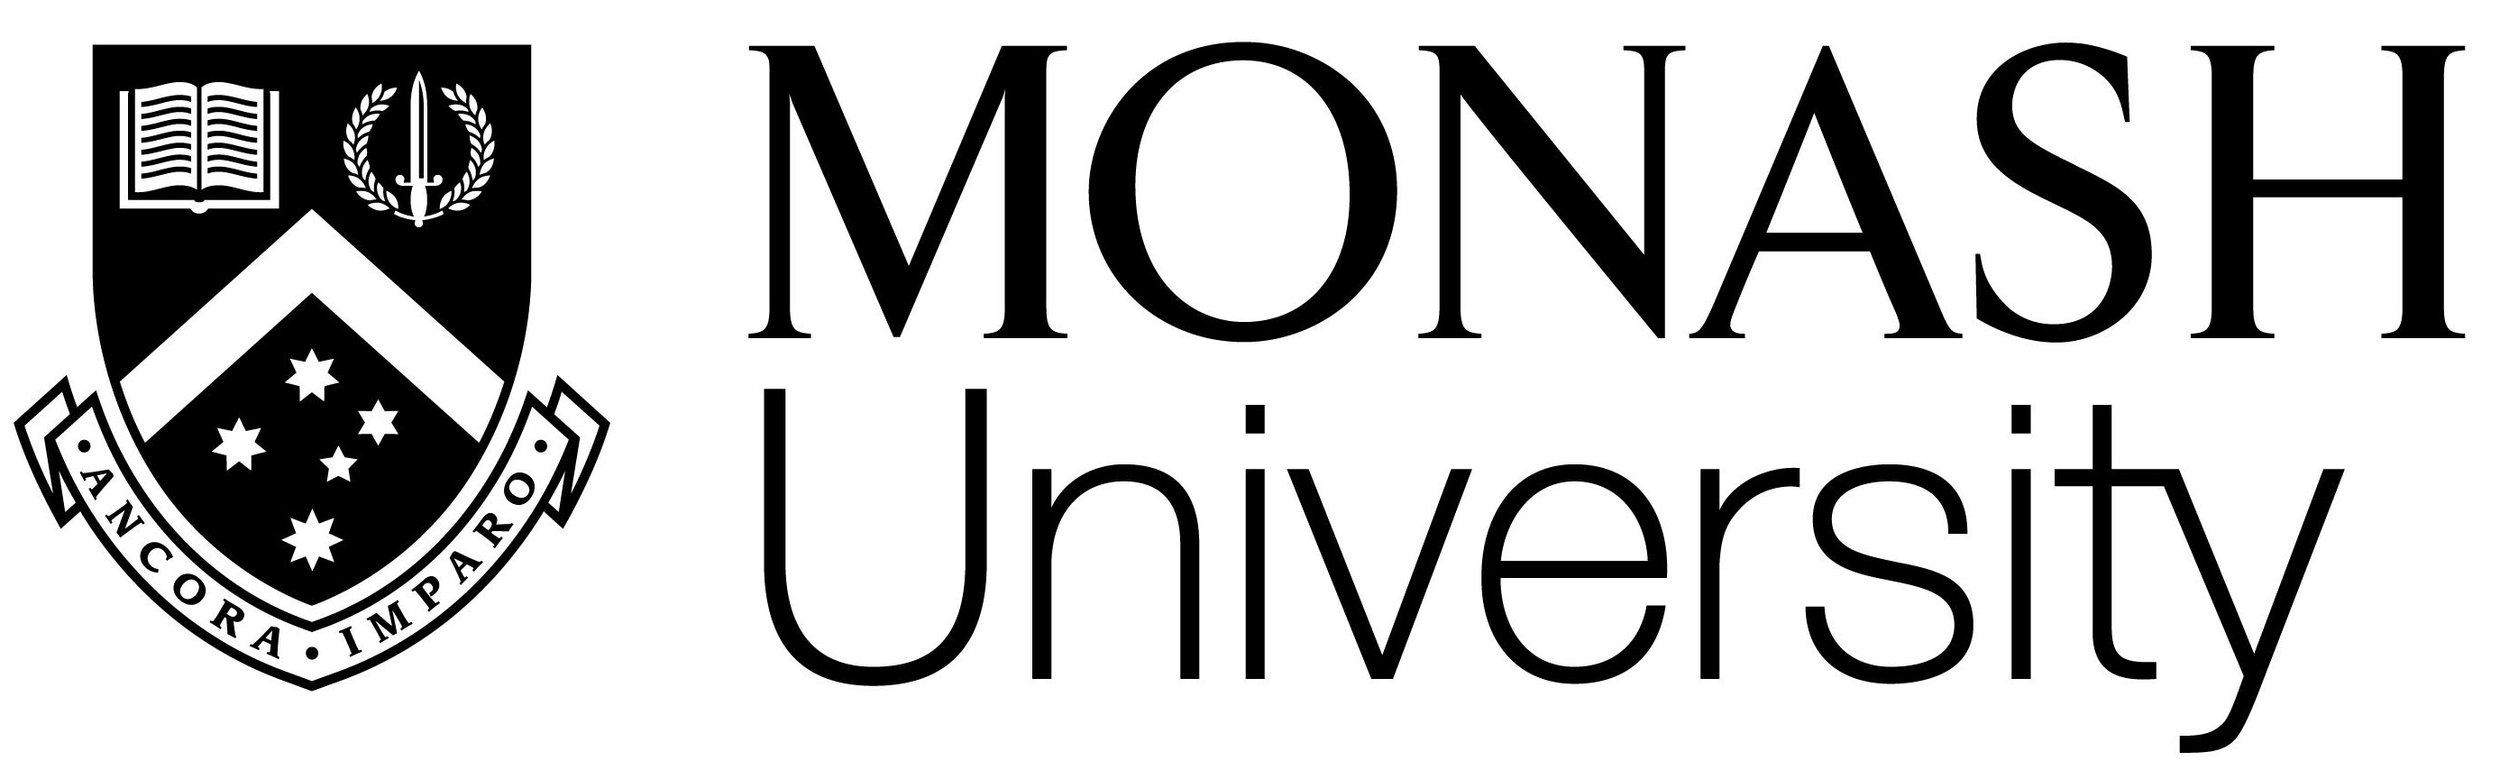 Monash University Logo.jpg